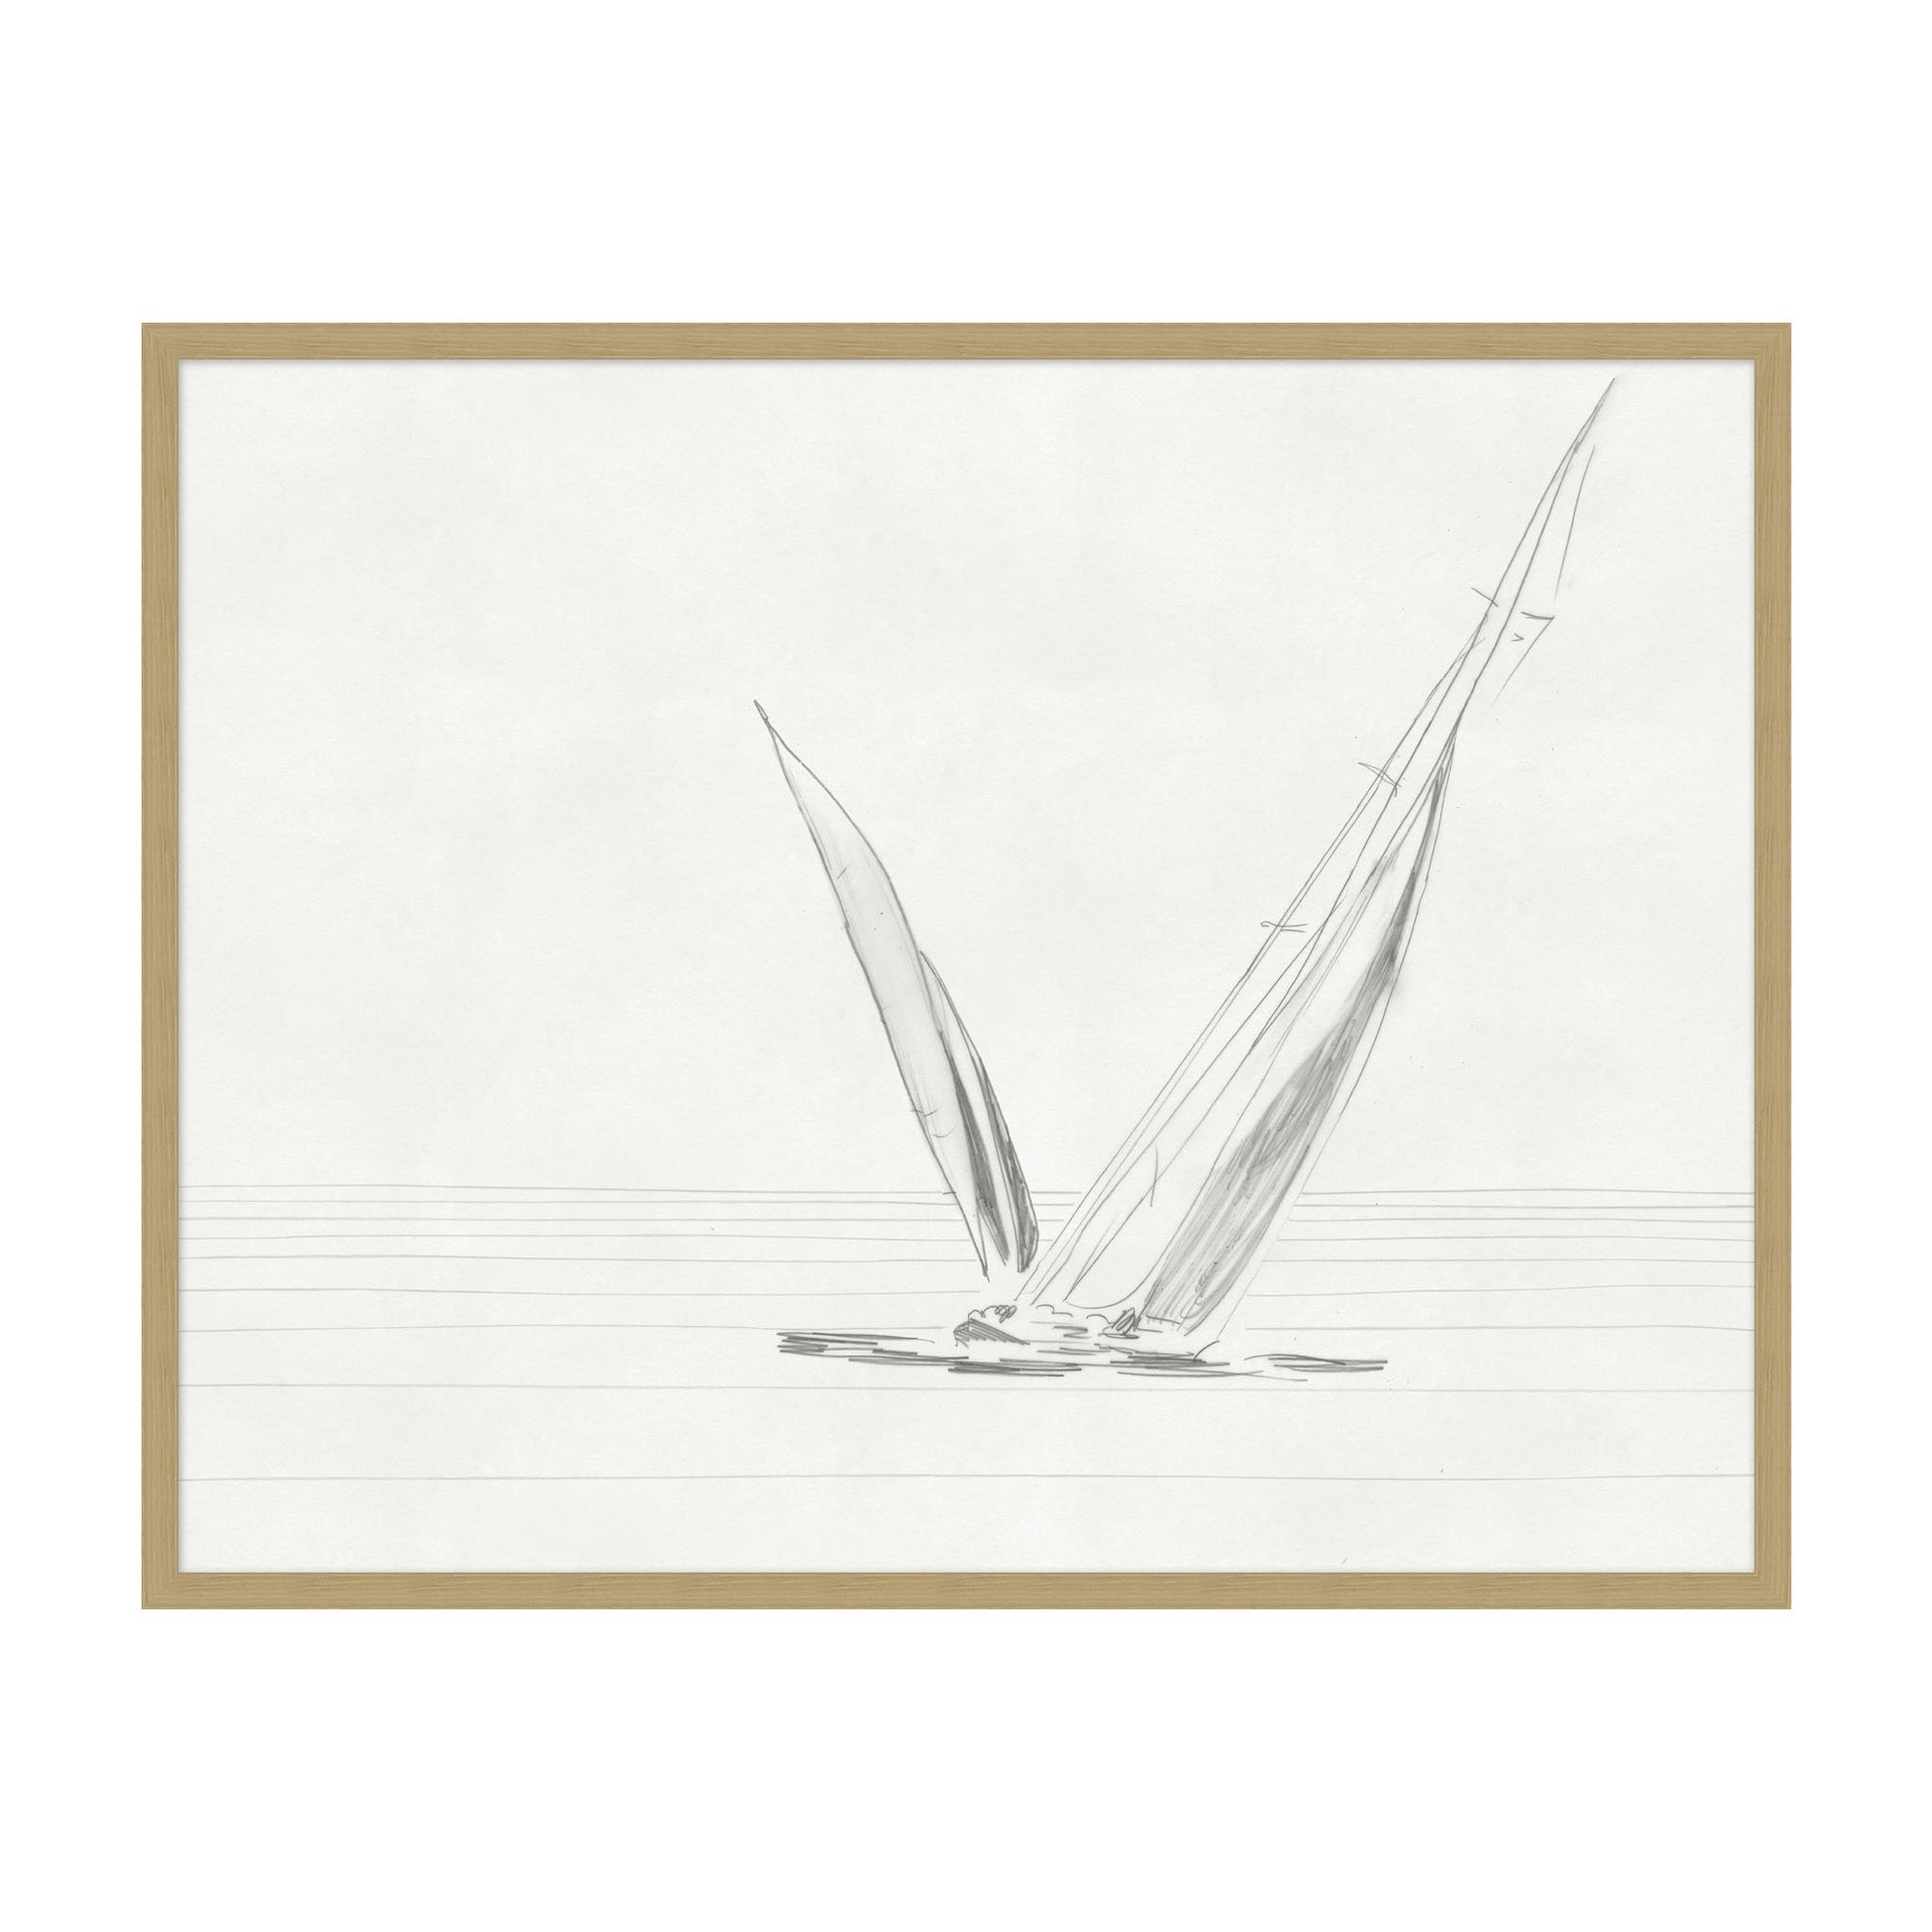 Sailors Sketch 4